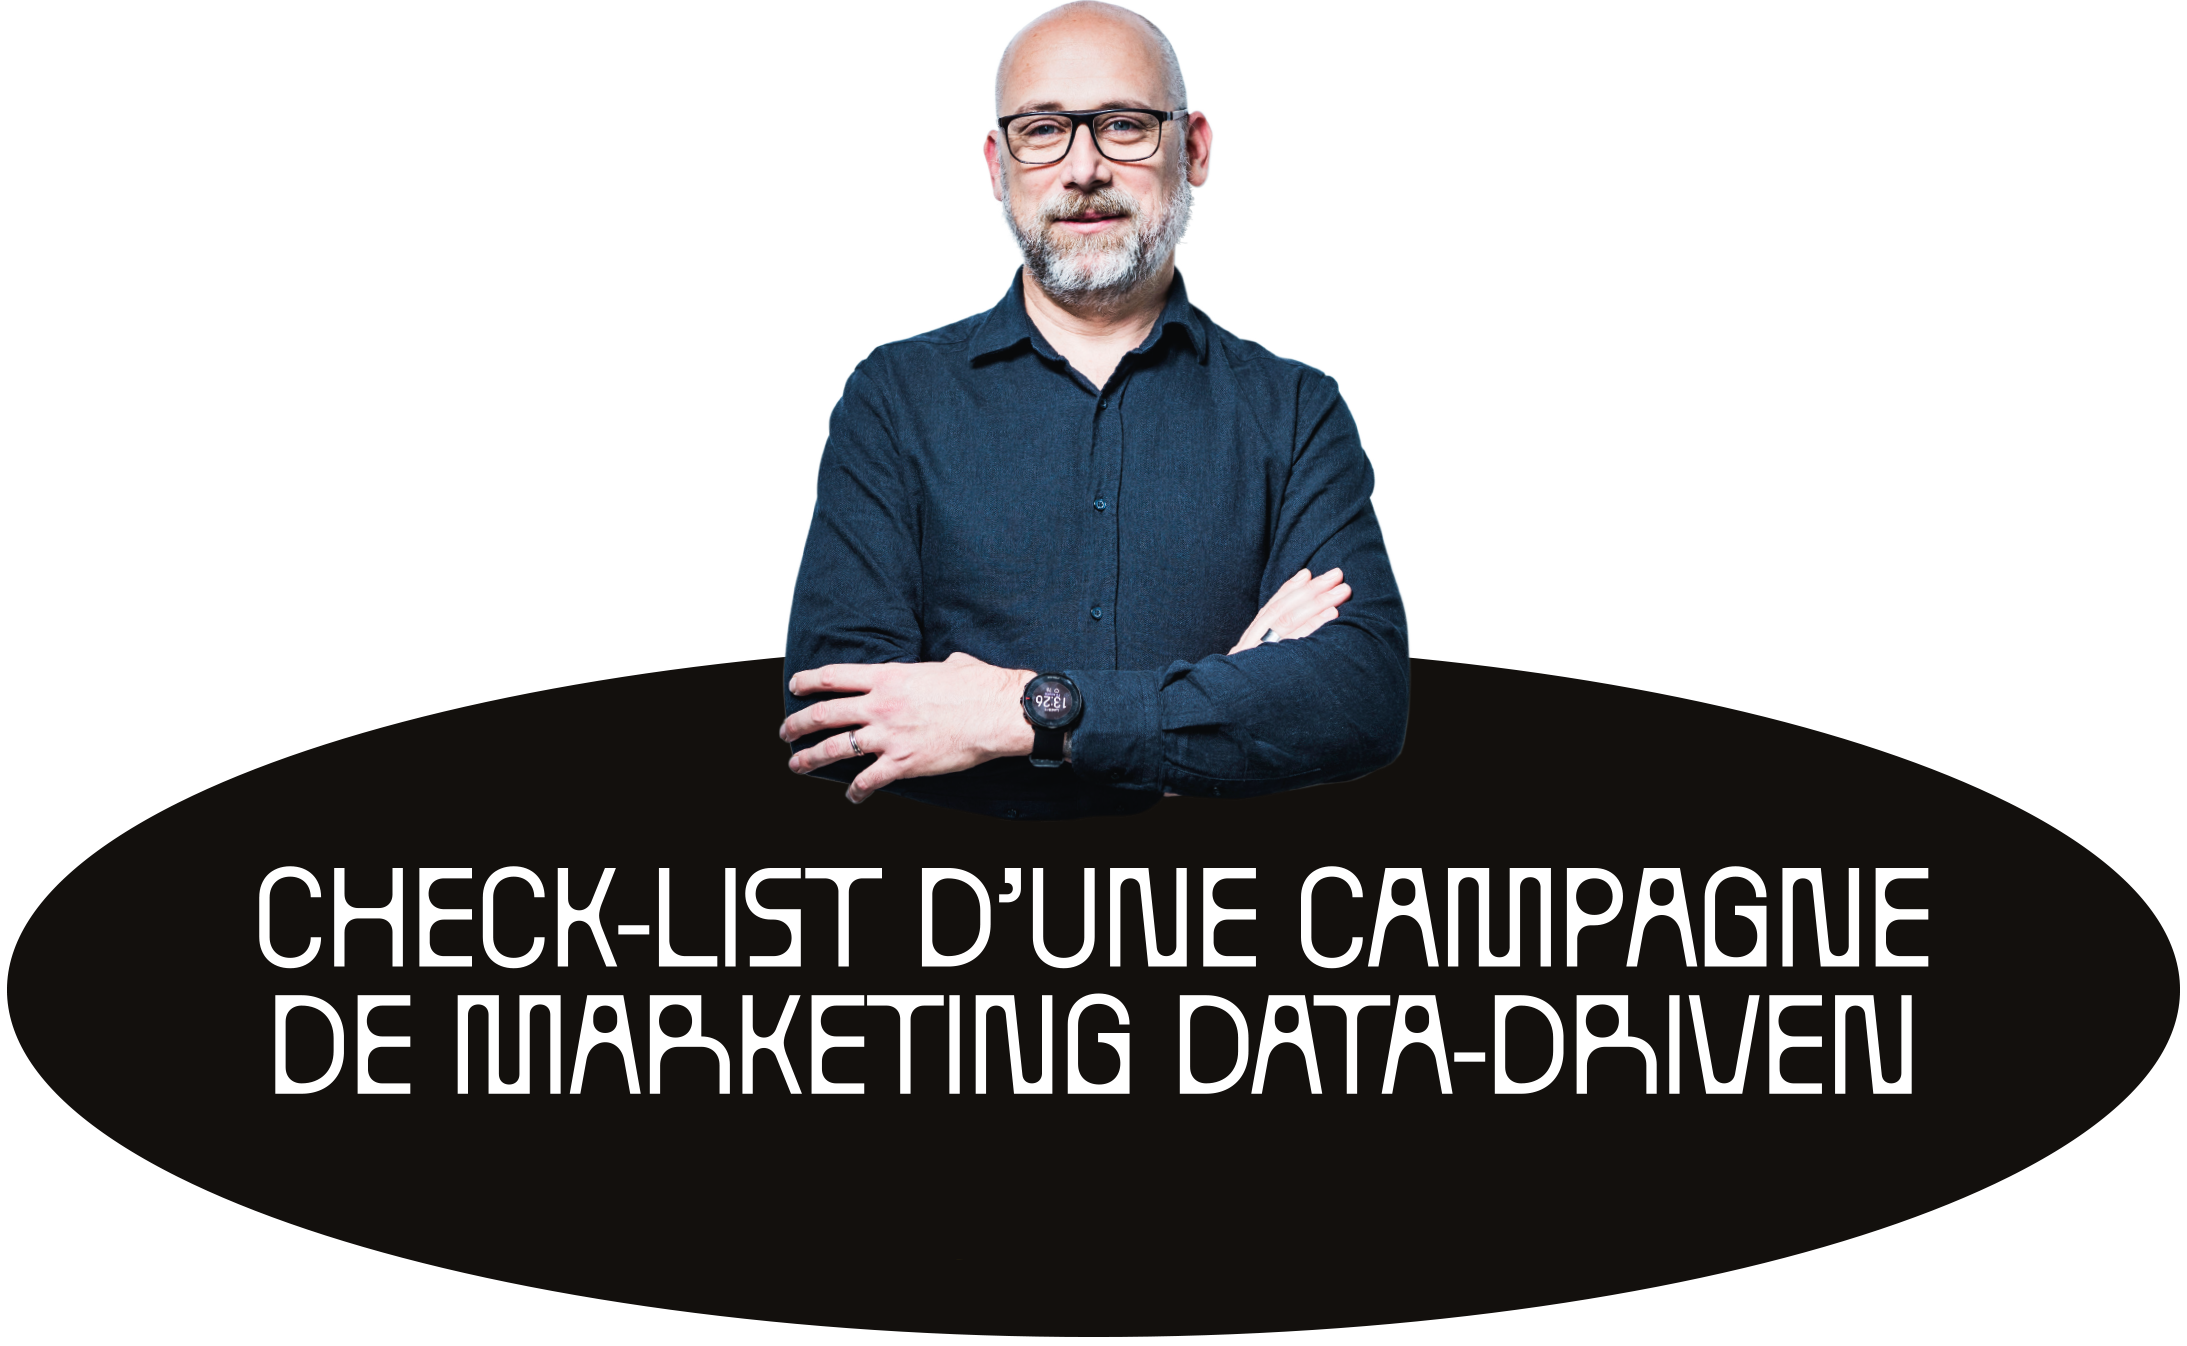 Check-list campagne marketing